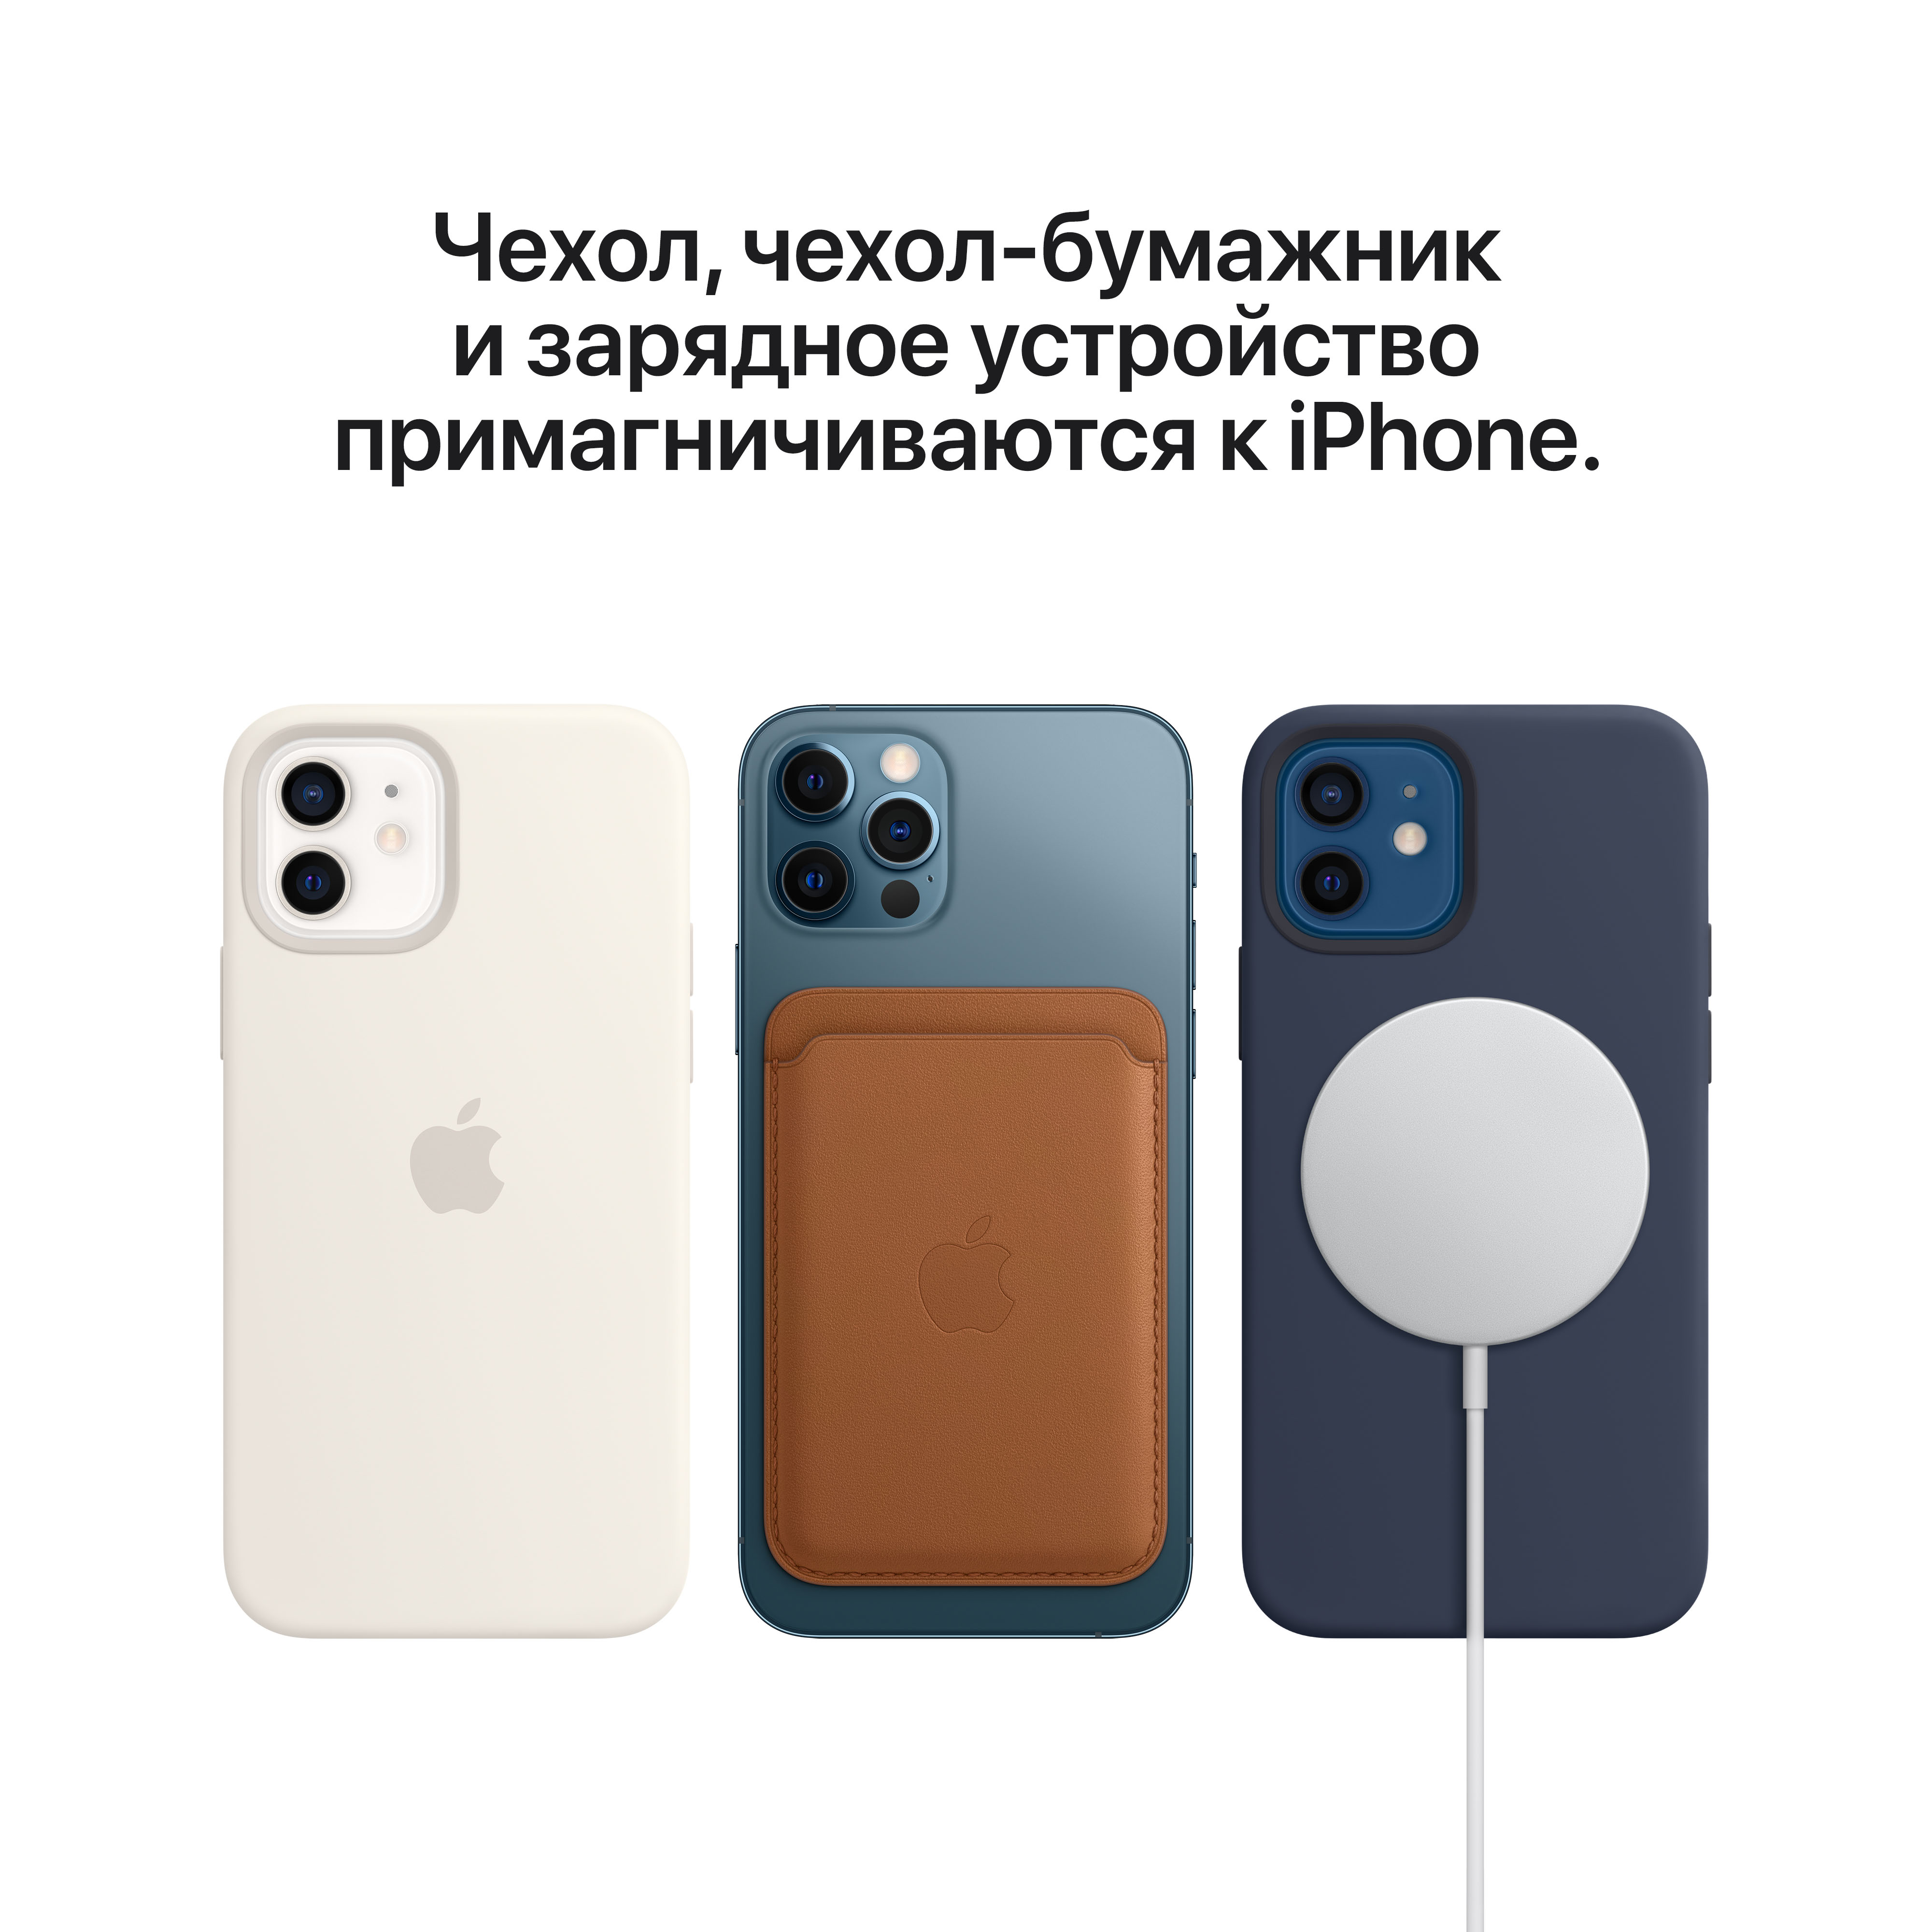 Максейф айфон 11. Iphone 12 MAGSAFE Case. Чехол iphone 12 Pro Max MAGSAFE. Apple Leather Case iphone 12 Pro Max. Silicon Case iphone 12 Pro Max.